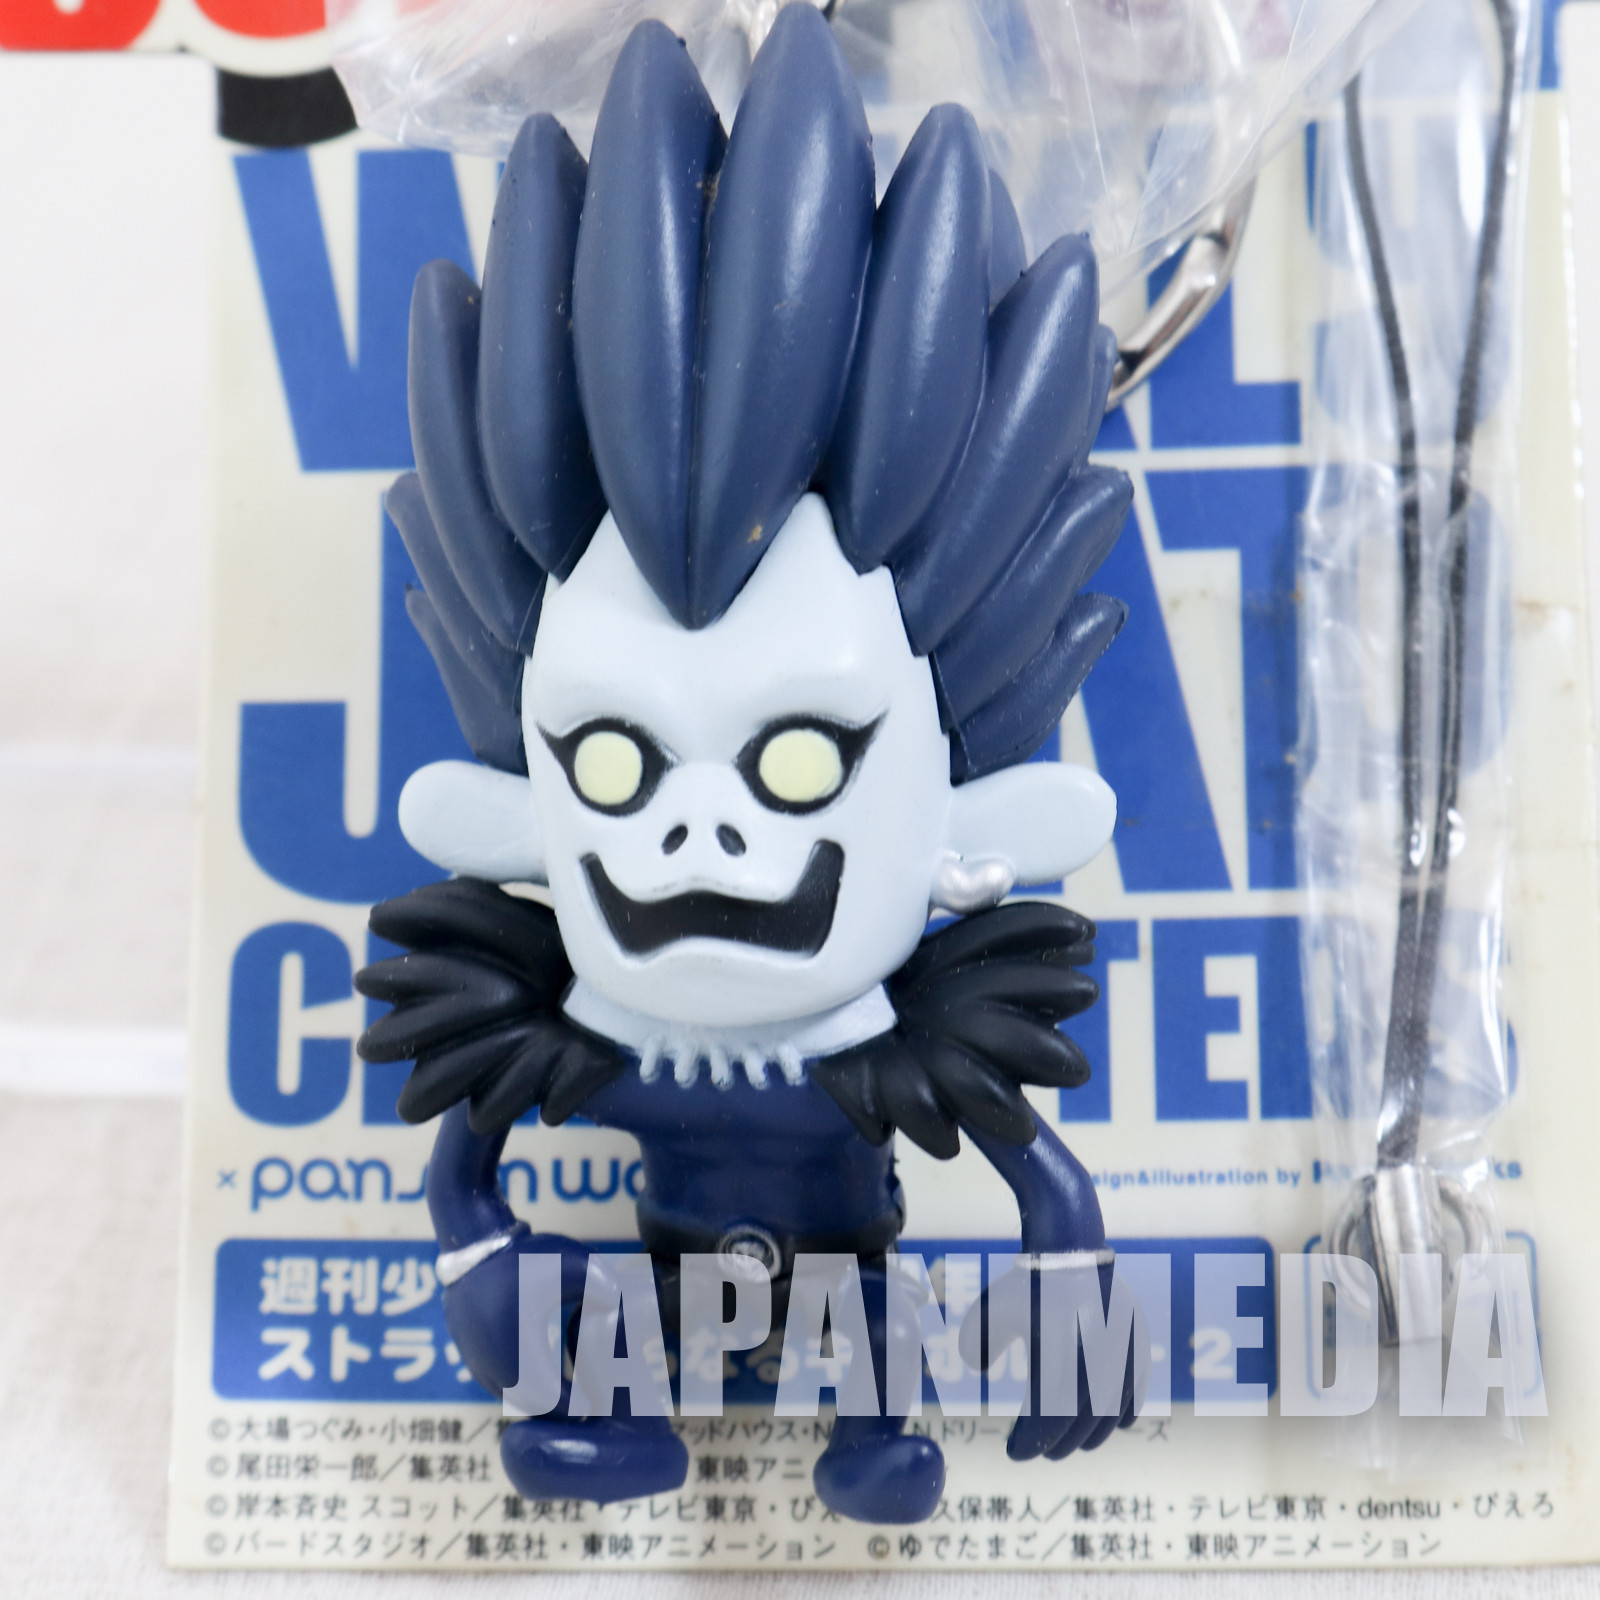 Death Note Shinigami Ryuk Figure Keychain Japan Anime Manga Shonen Jump Japanimedia Store